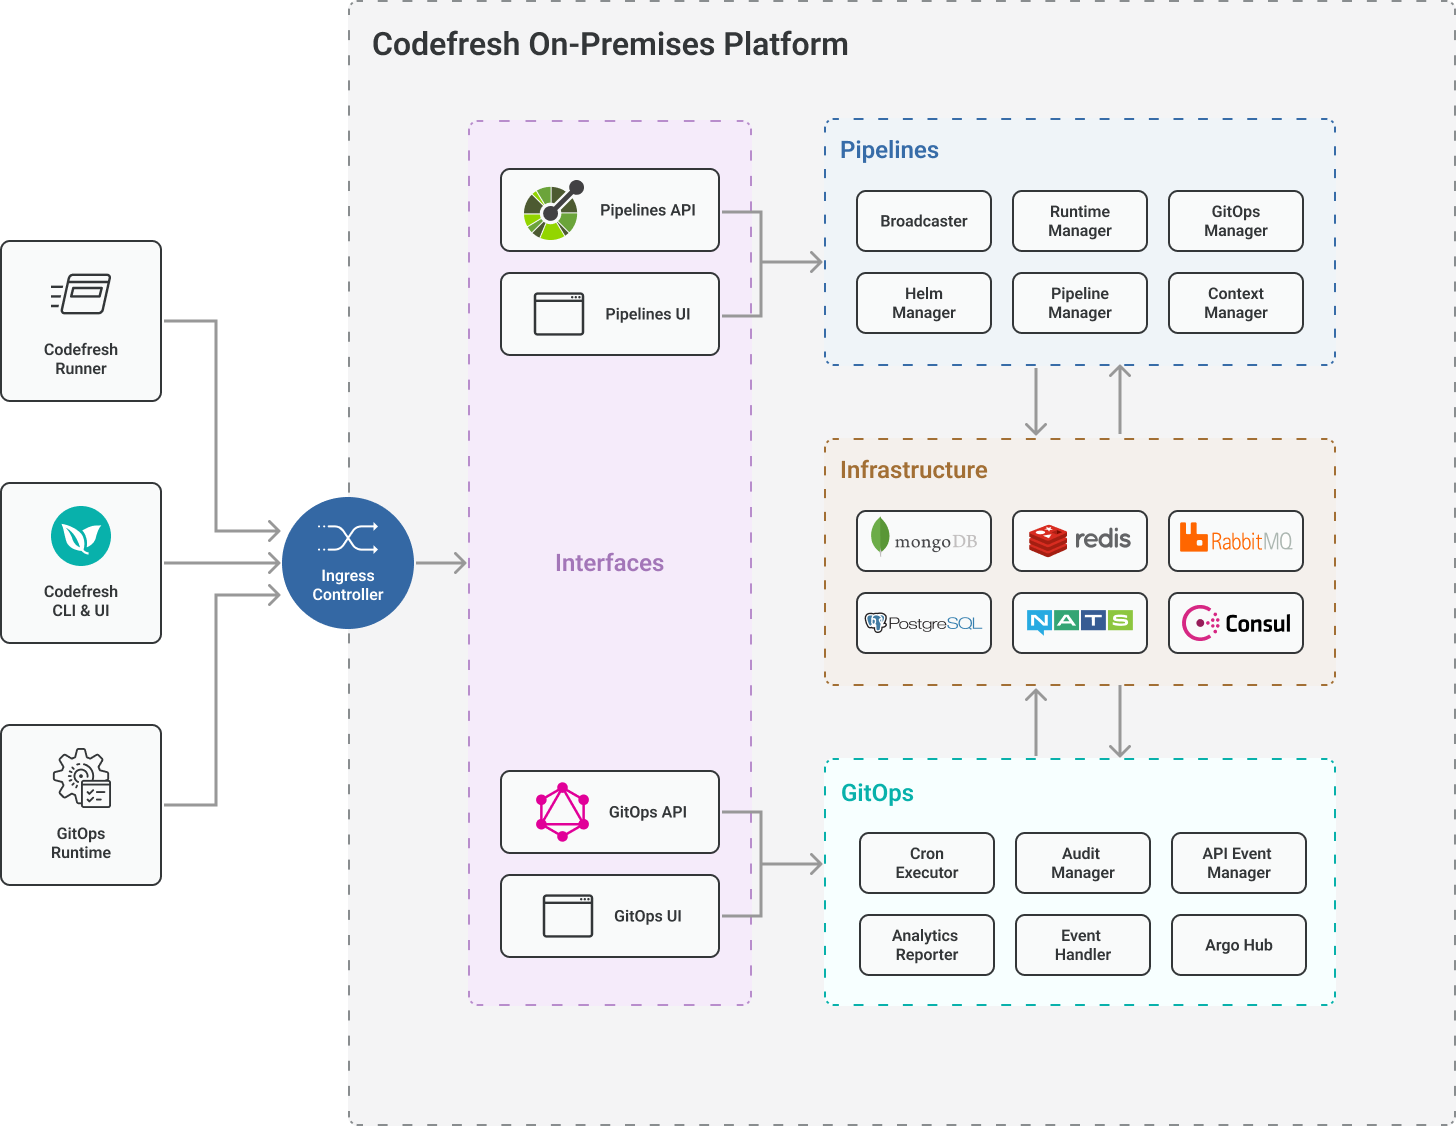 Codefresh On-Premises platform architecture